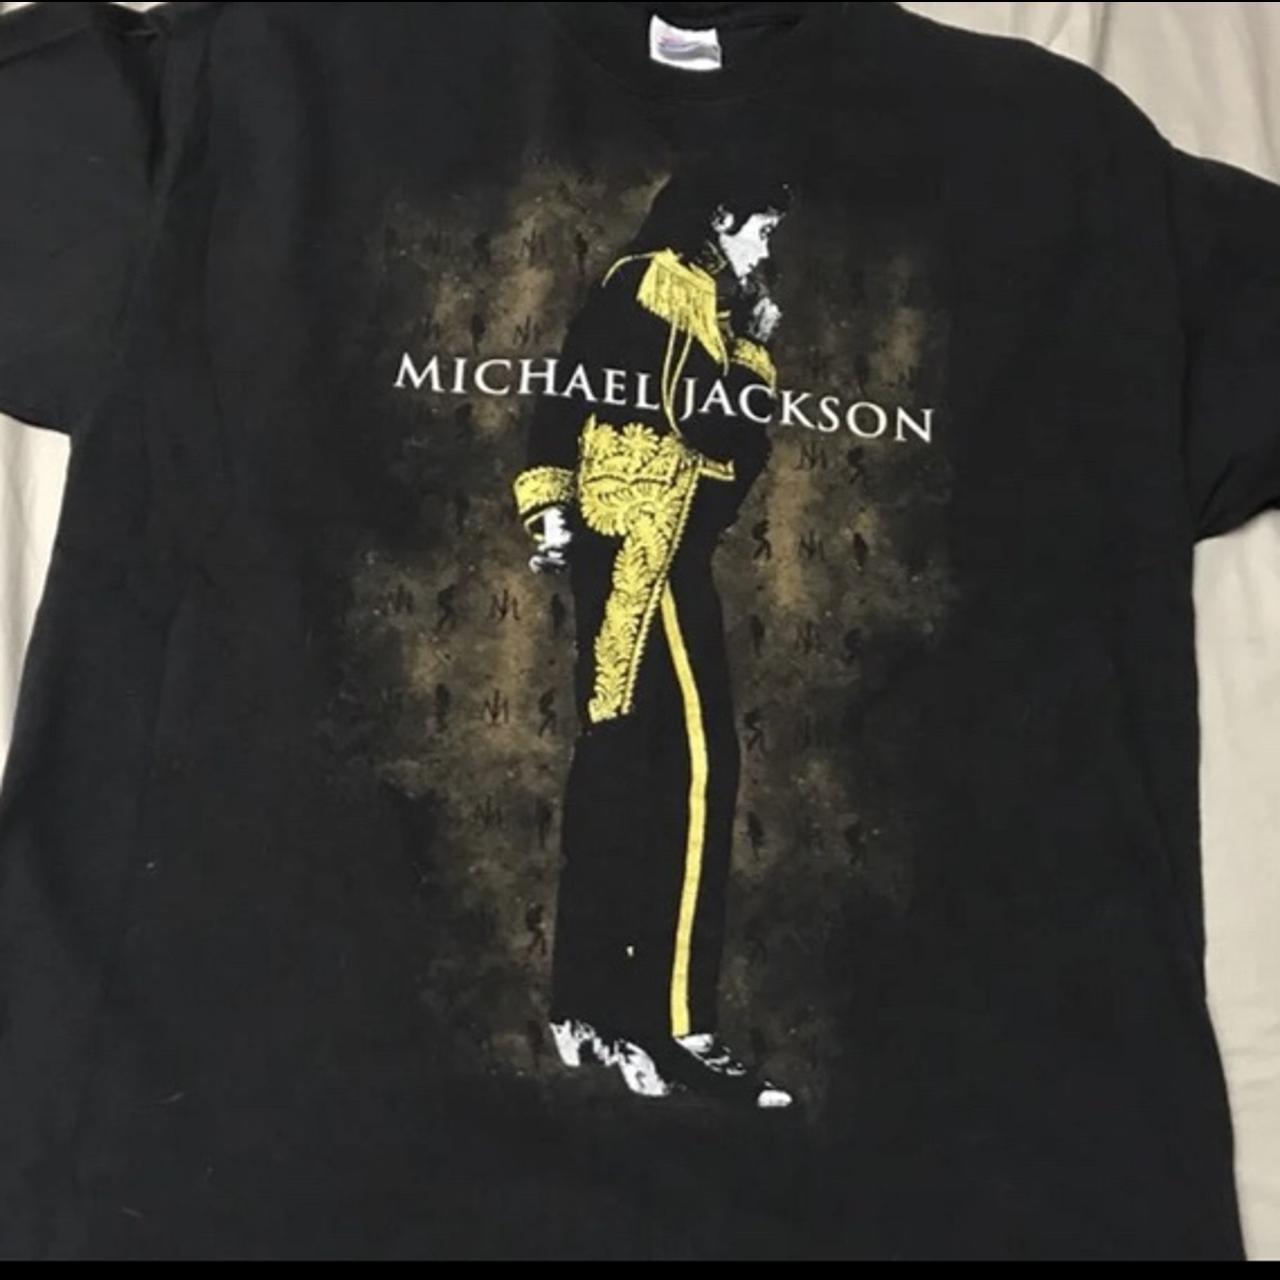 King Of Pop Michael Jackson shirt, Michael Jackson Thriller Shirt